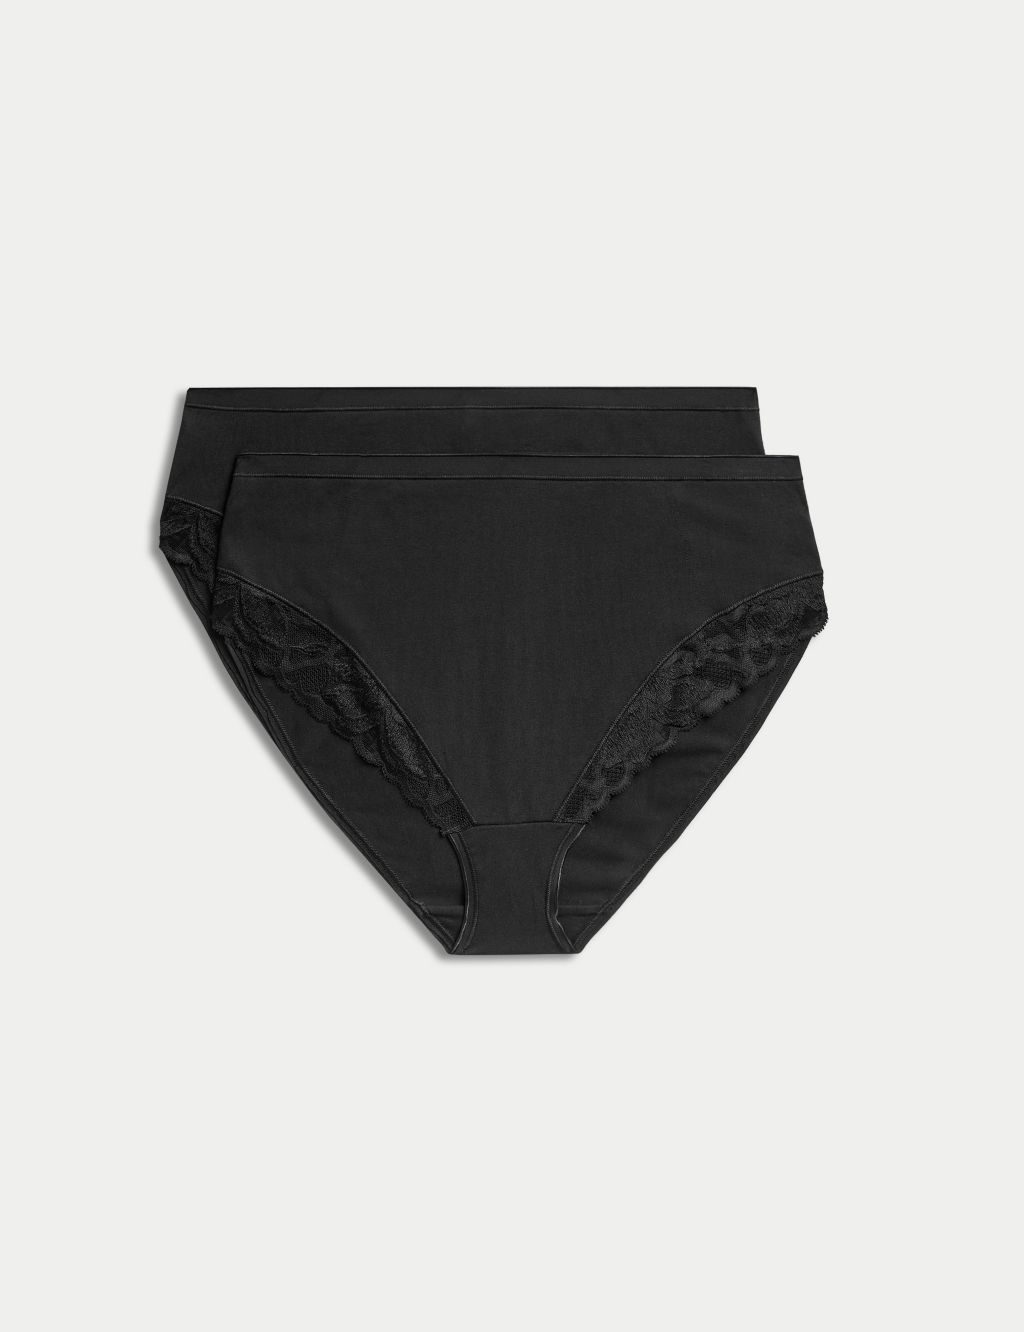 LADIES BLACK SHAPEWEAR Pants Xl From TU Sainsburys £2.99 - PicClick UK